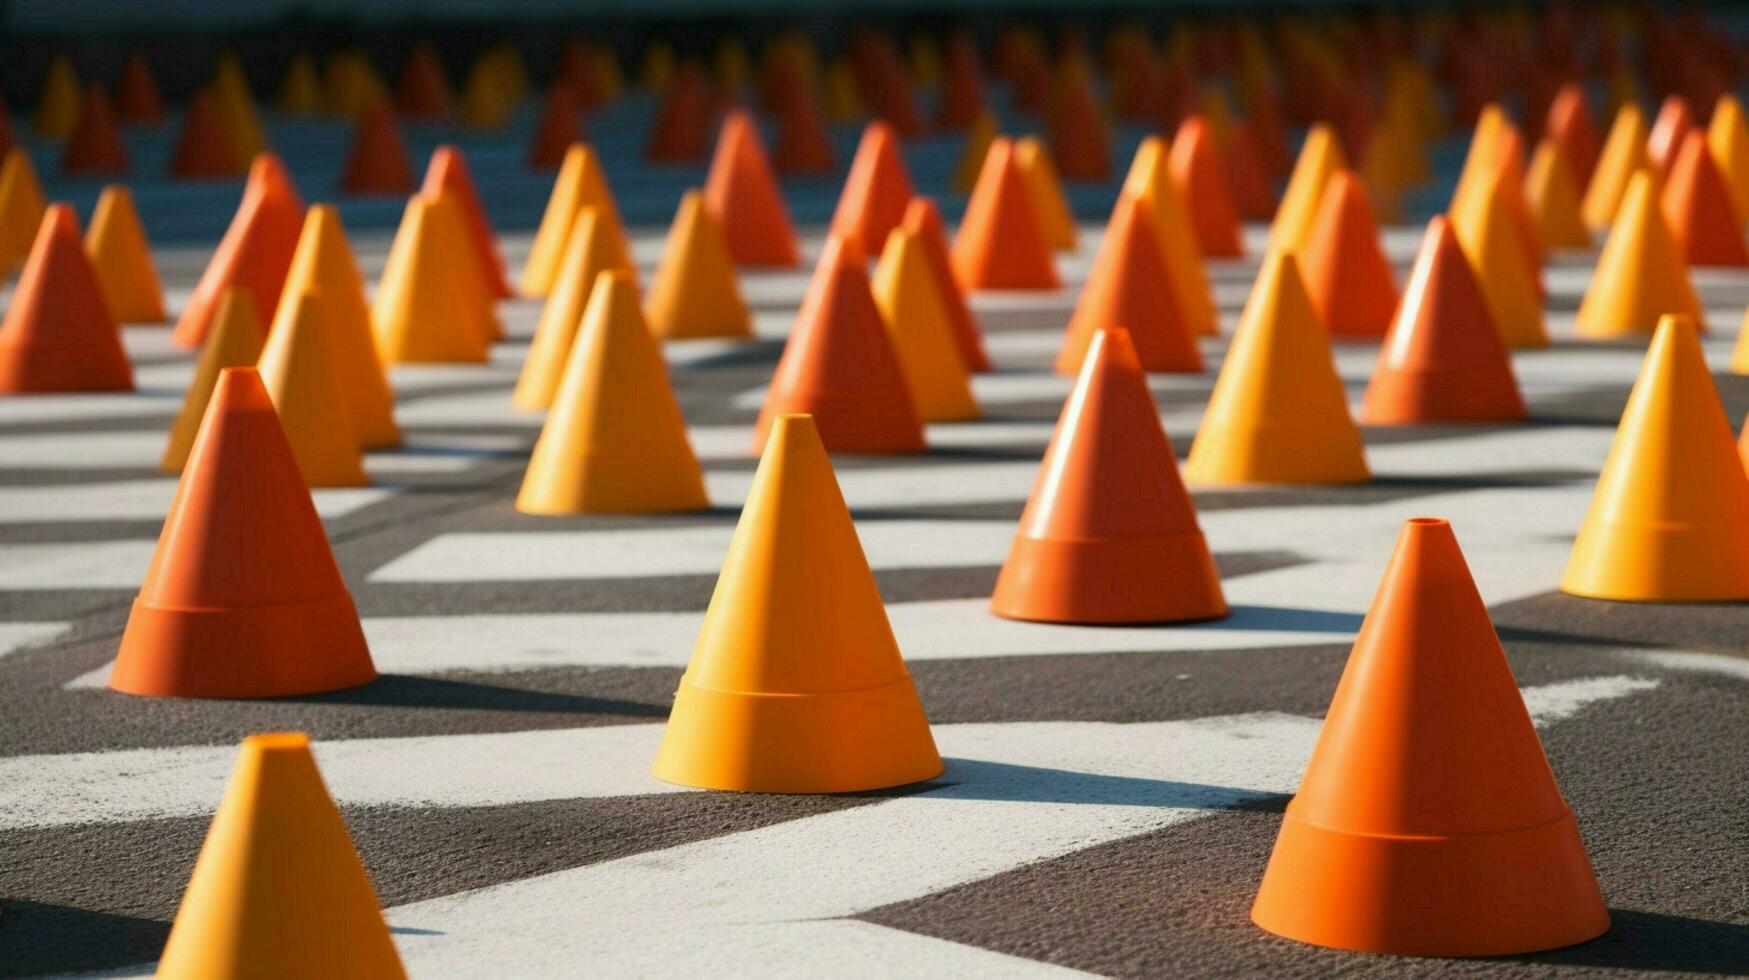 traffic cones arranged in creative pattern photo